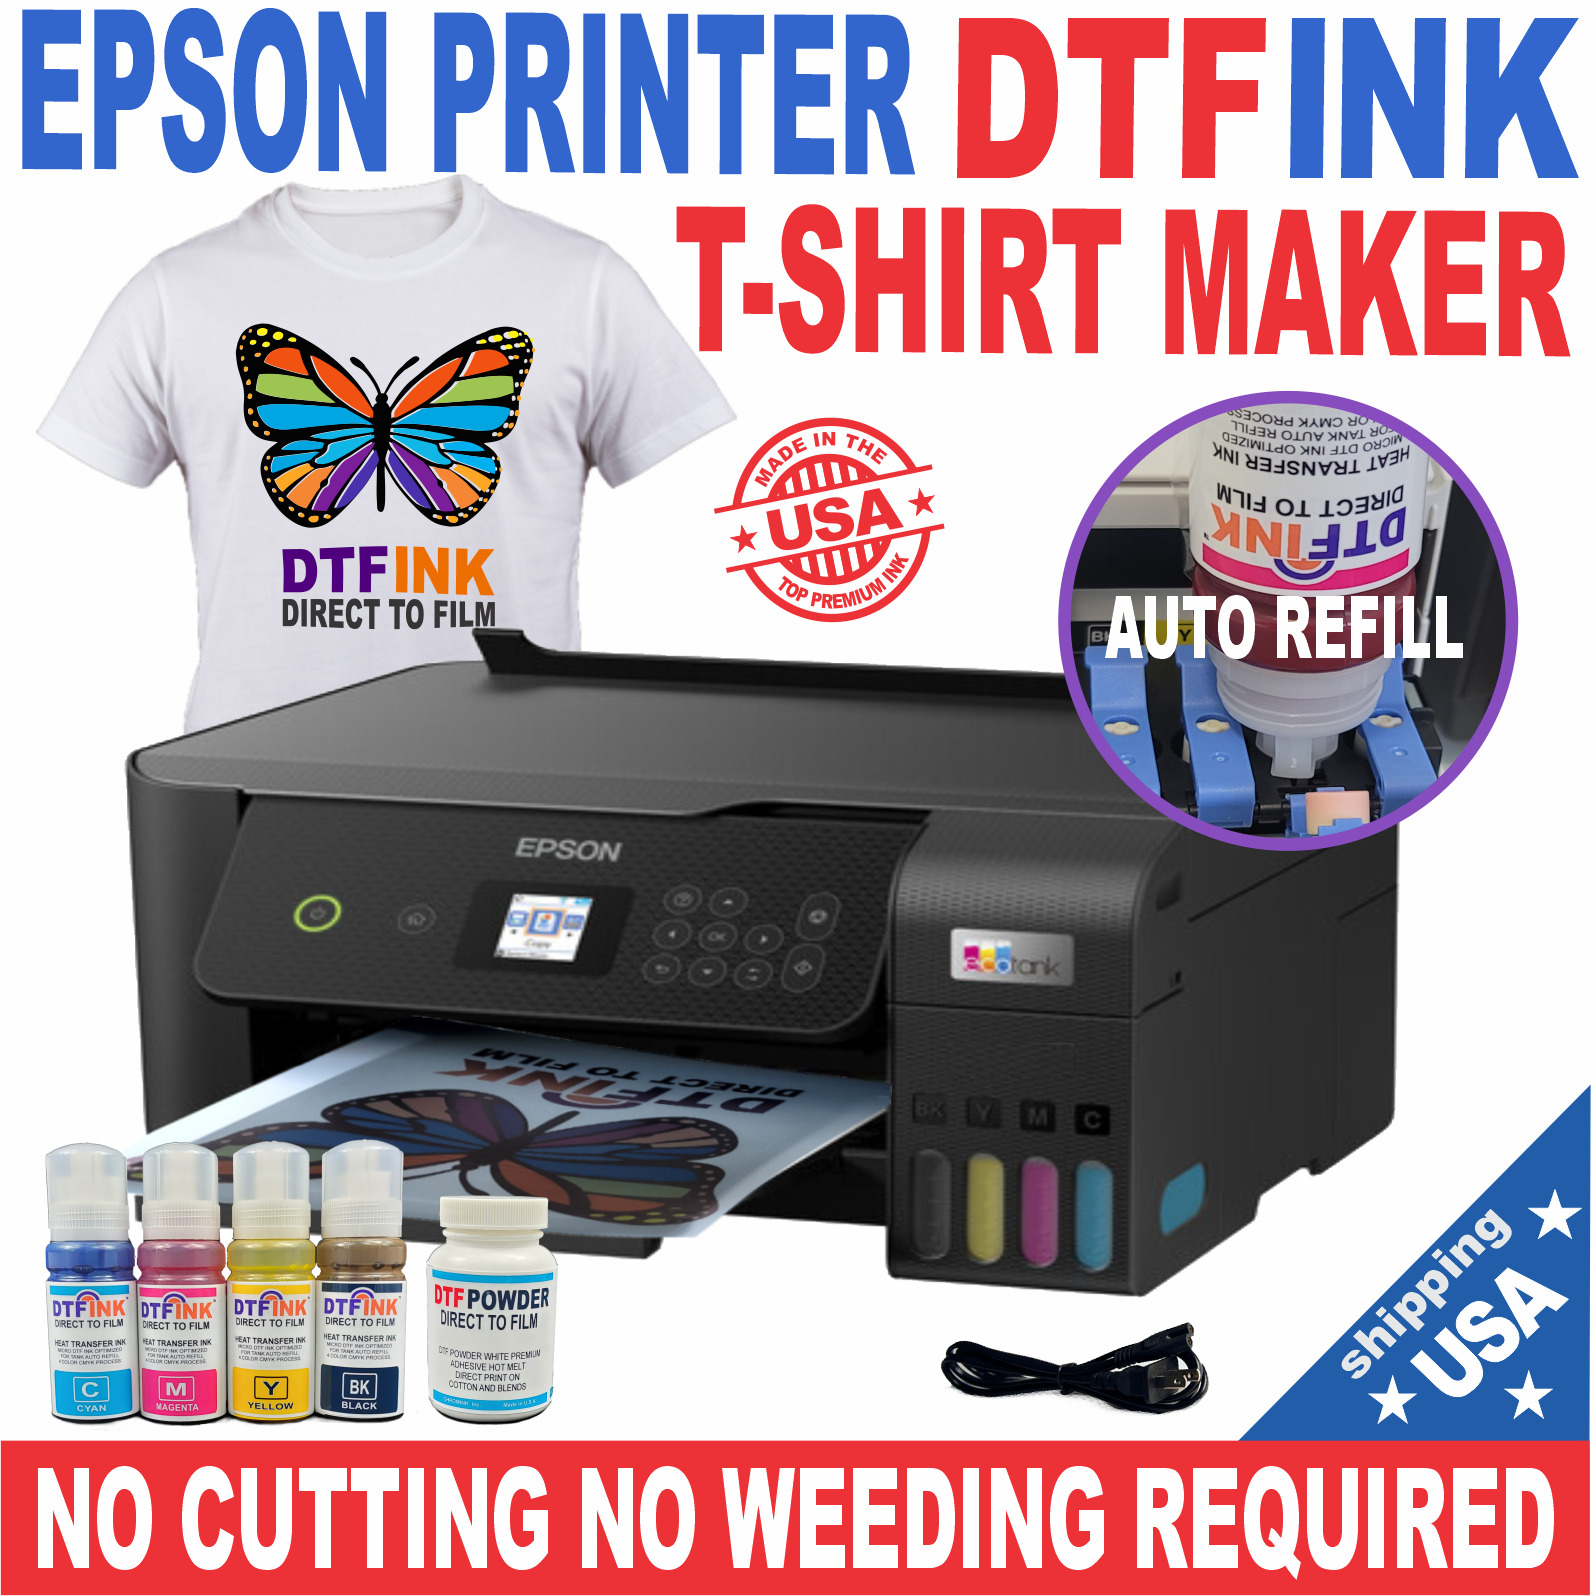 EPSON TANK PRINTER WITH DTF INK HEAT TRANSFER T-SHIRT PRINT NO CUT BUNDLE START